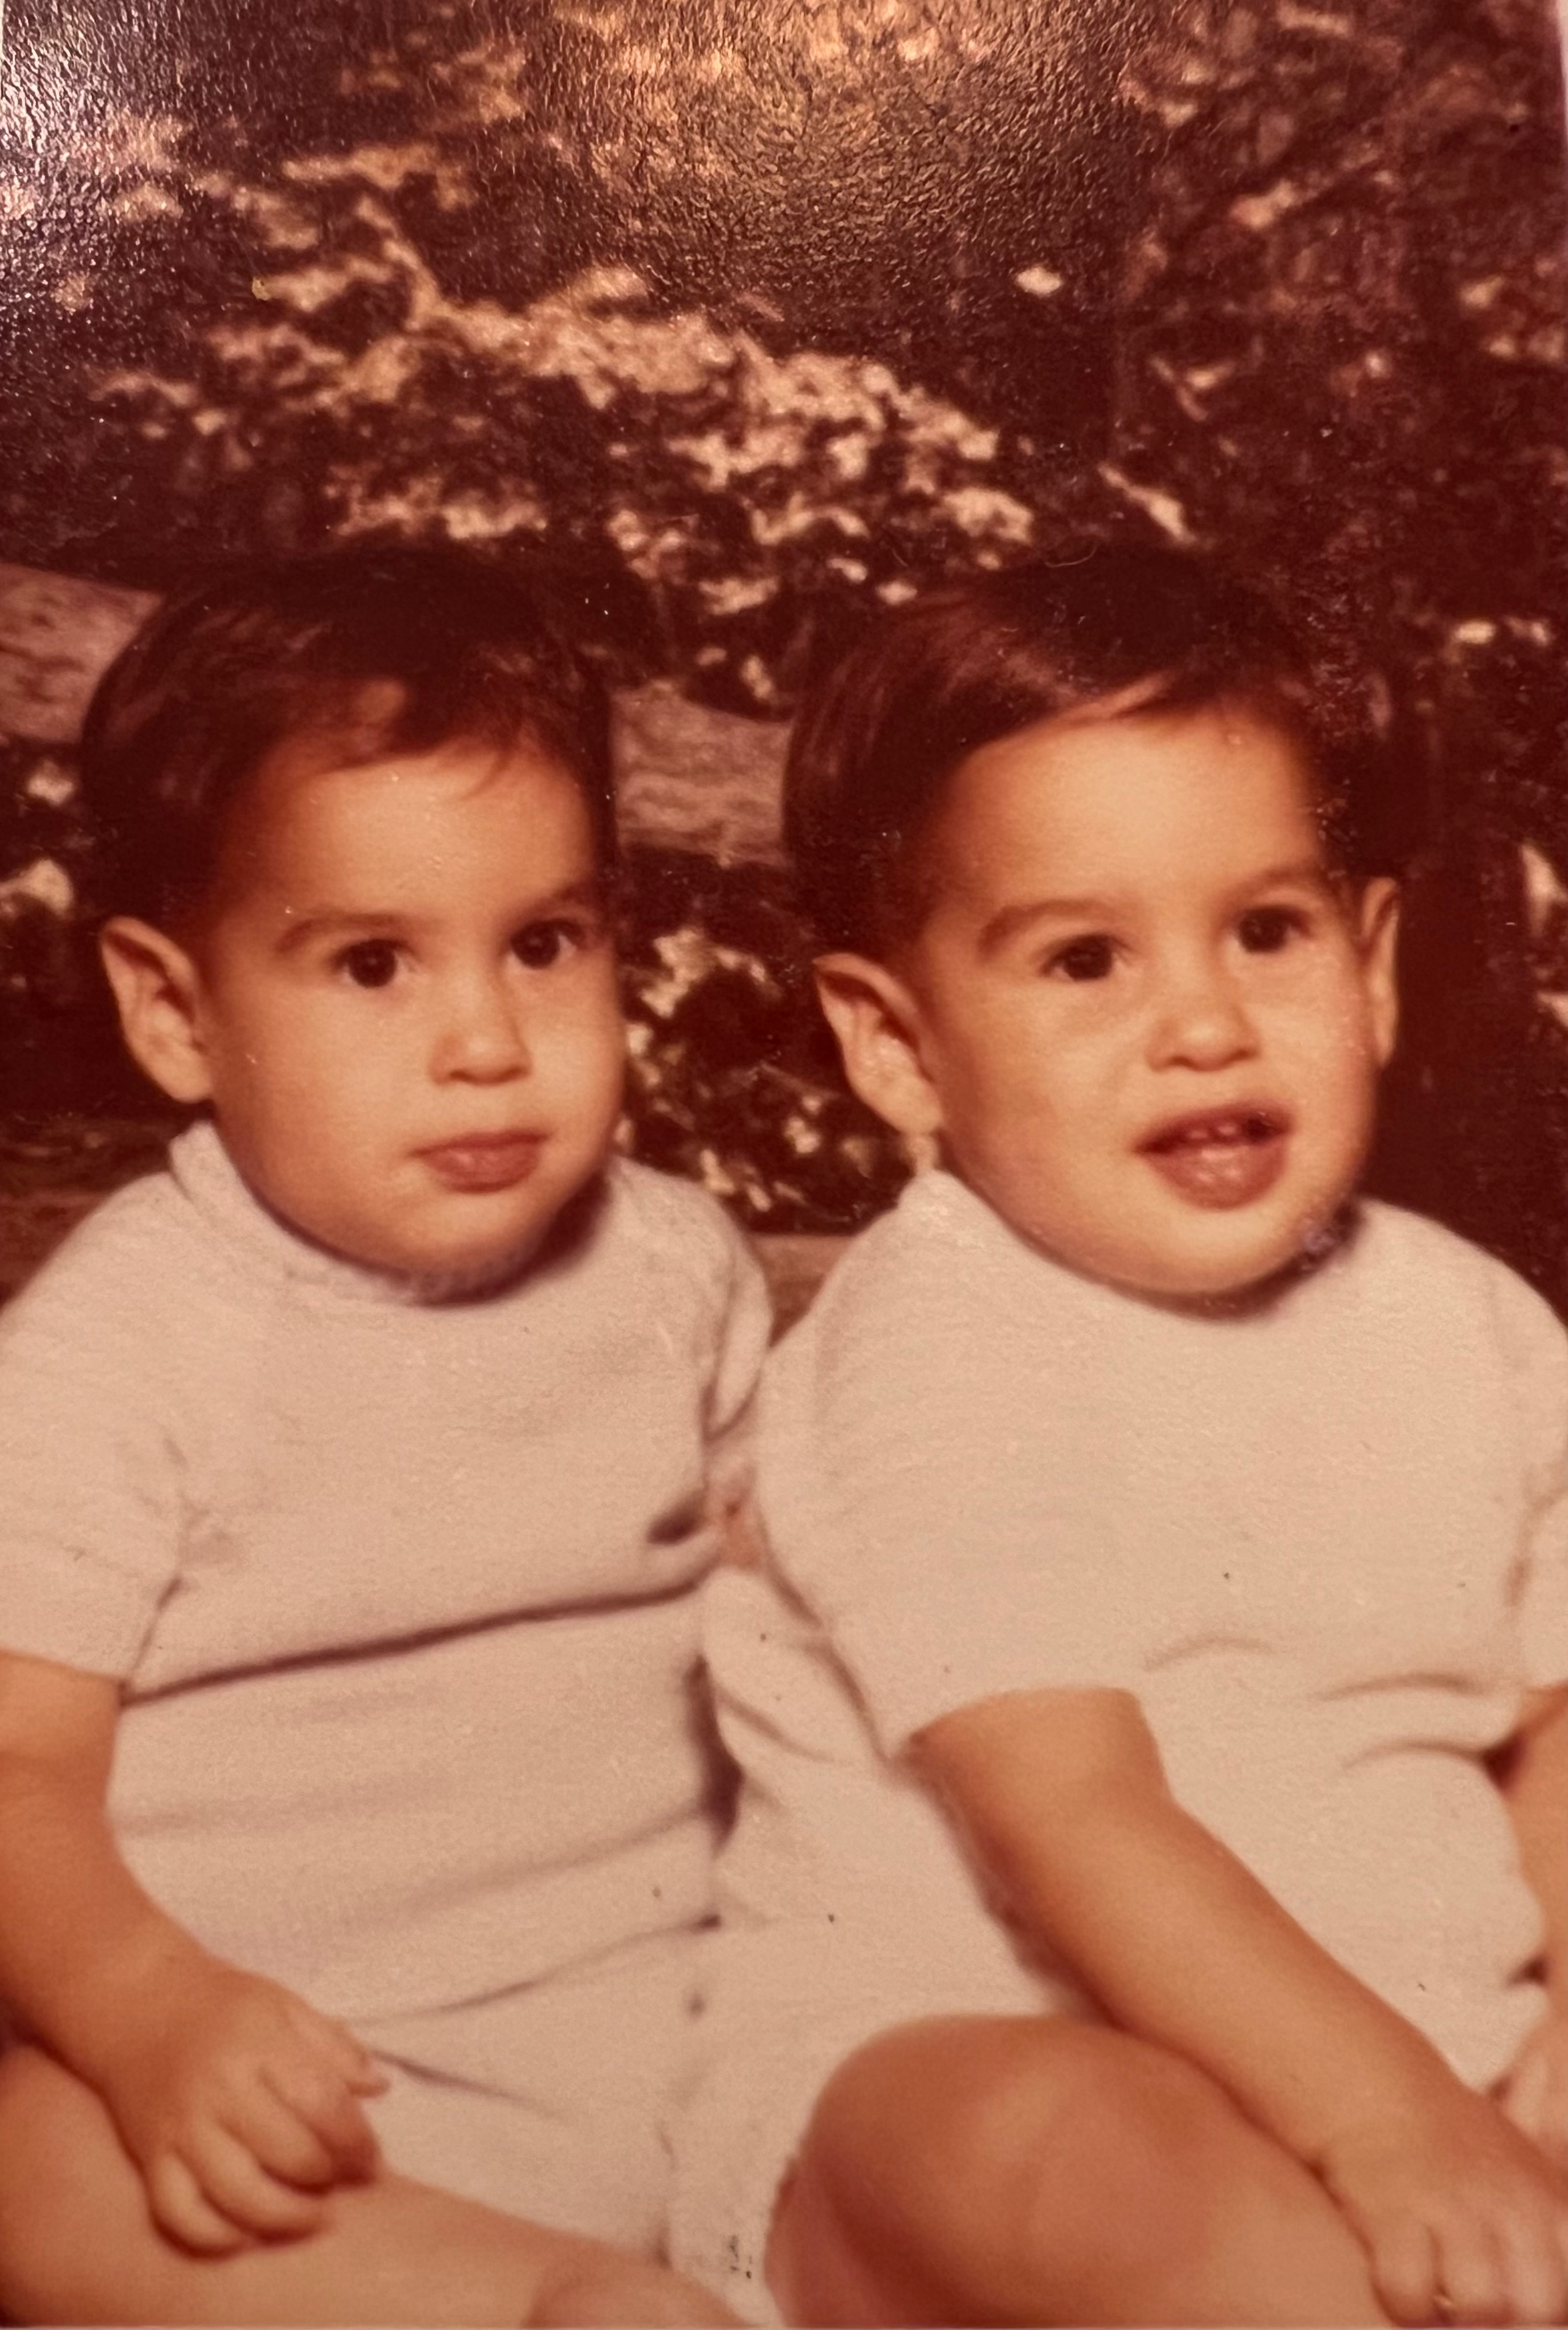 Jon Anik and Jason Anik Twin brother baby photo